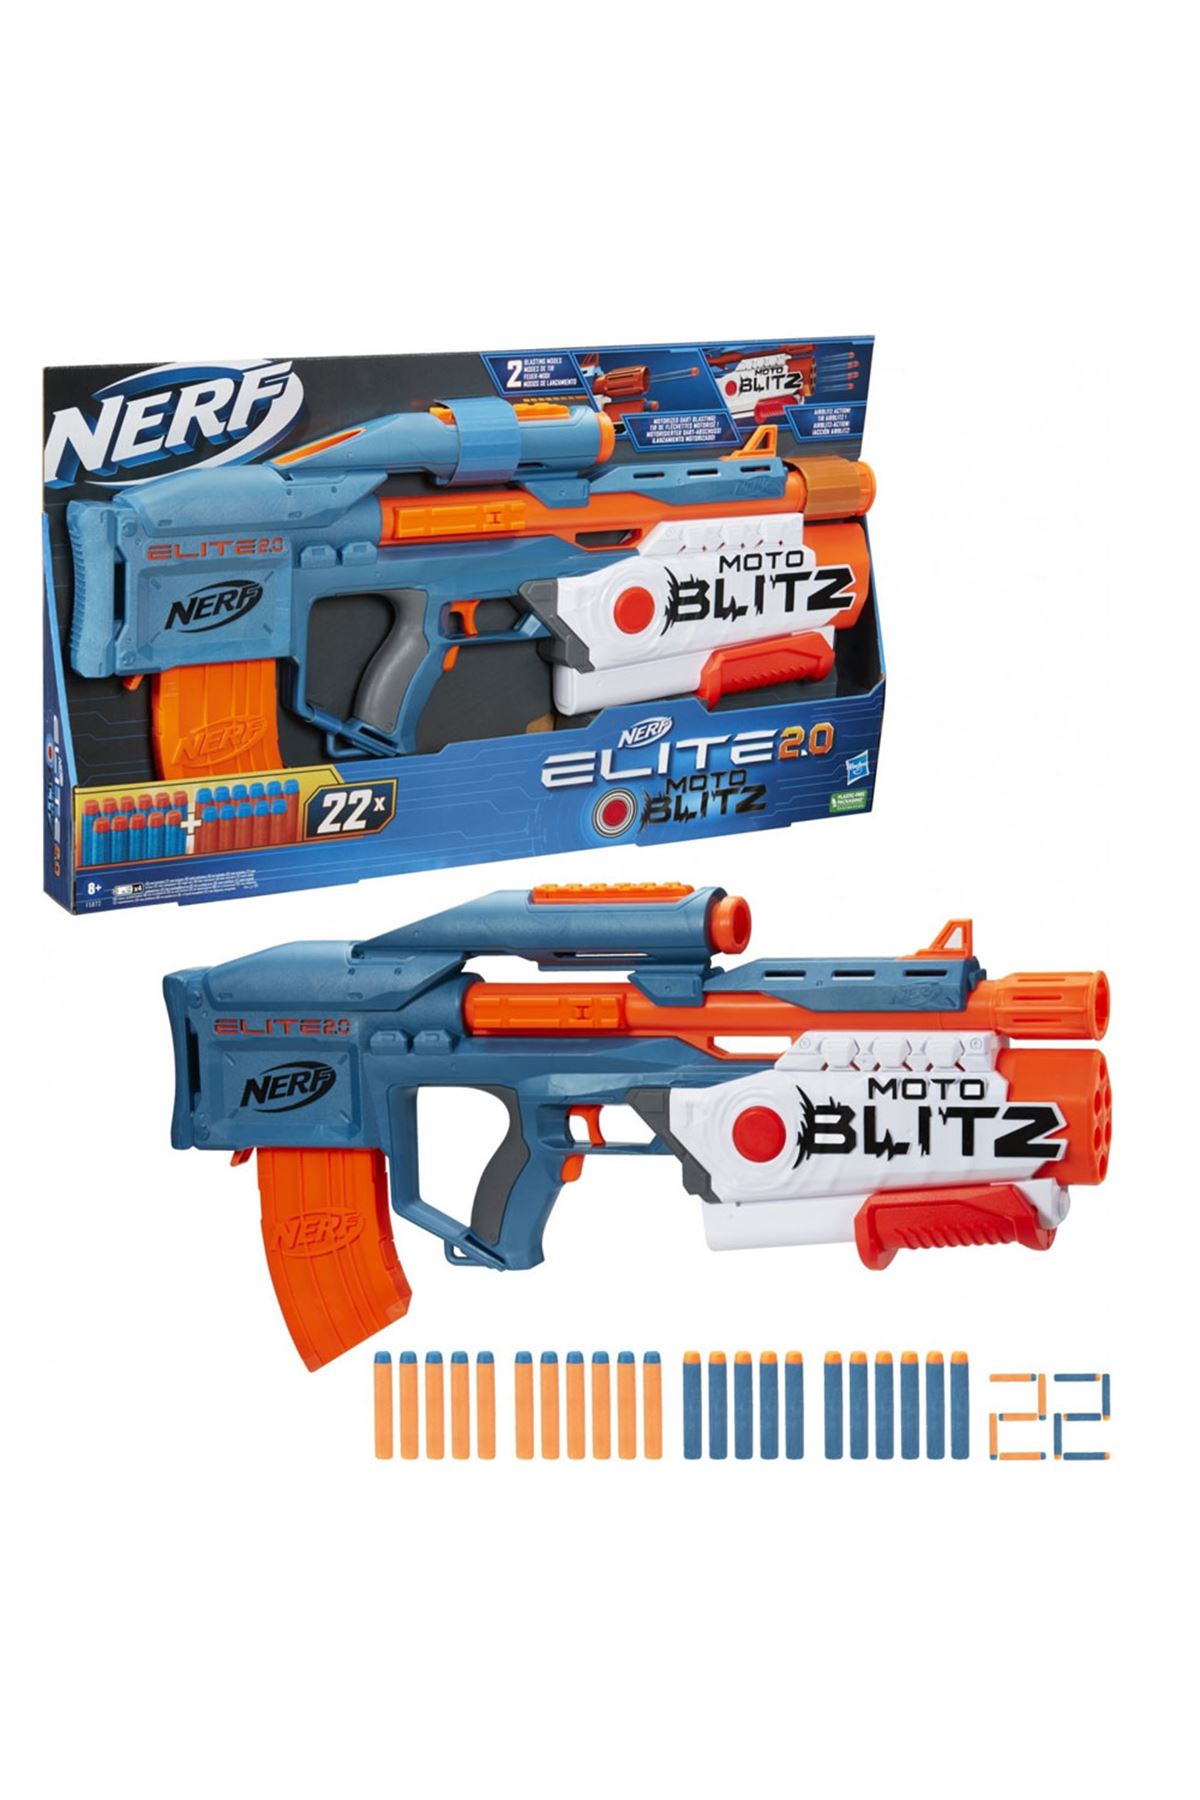 Nerf Elite 2.0 Motoblitz CS-10 F5872